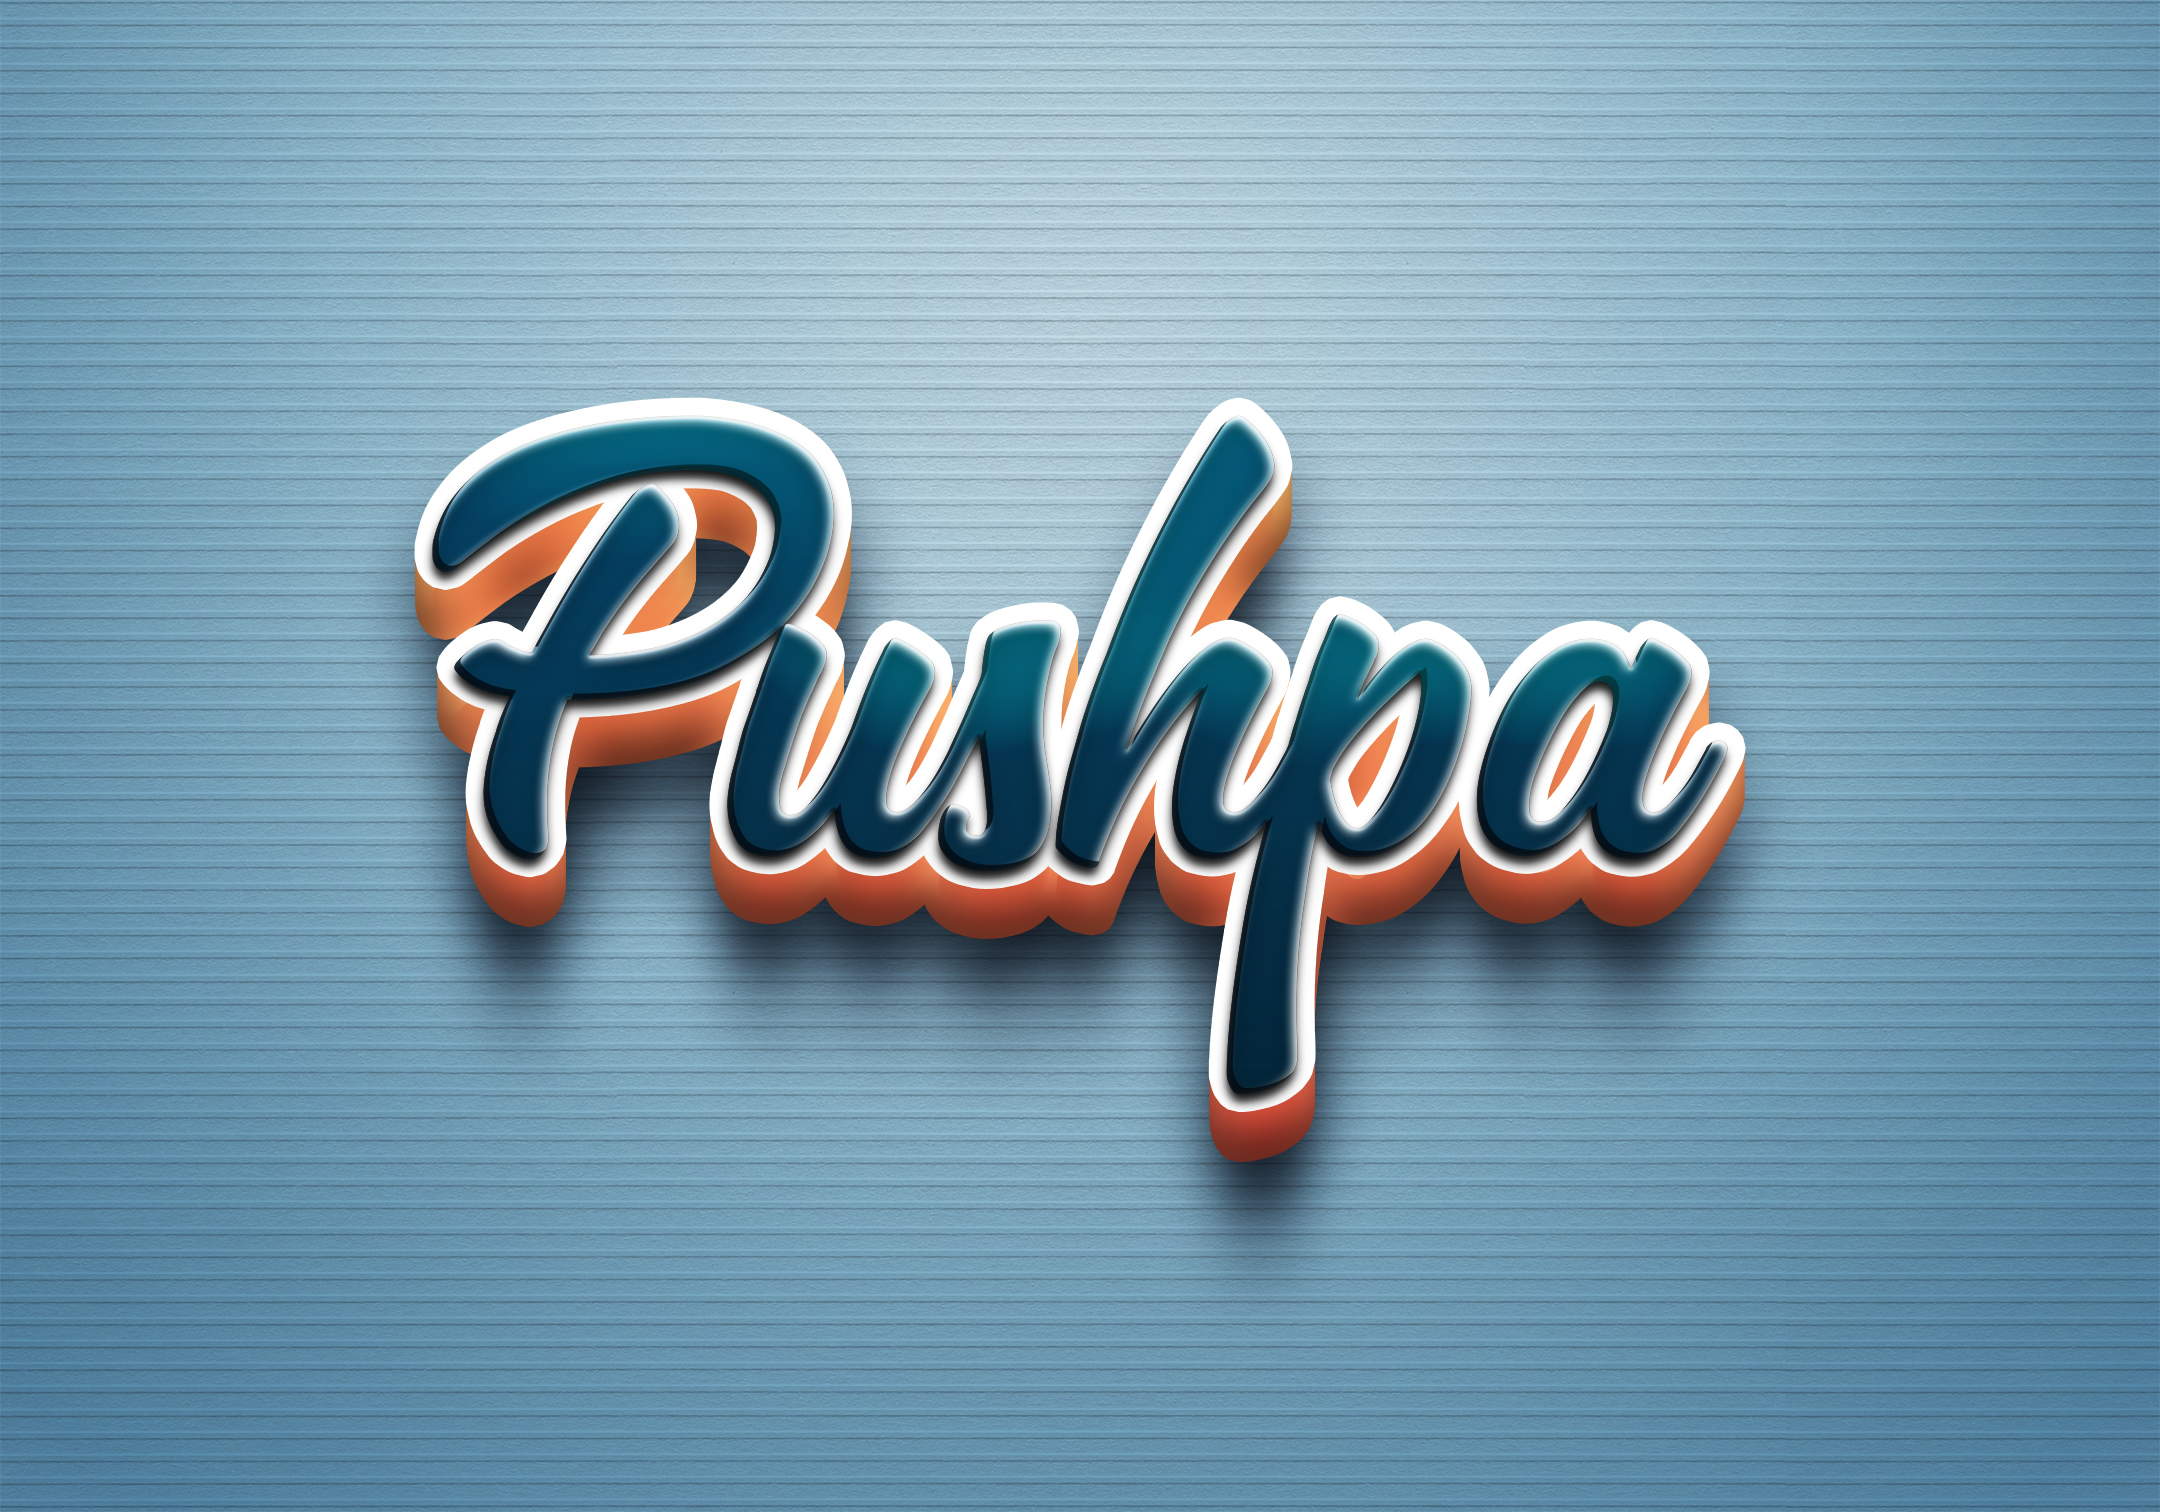 Allu Arjun Pushpa movie t shirts, Pushpa logo t shirts